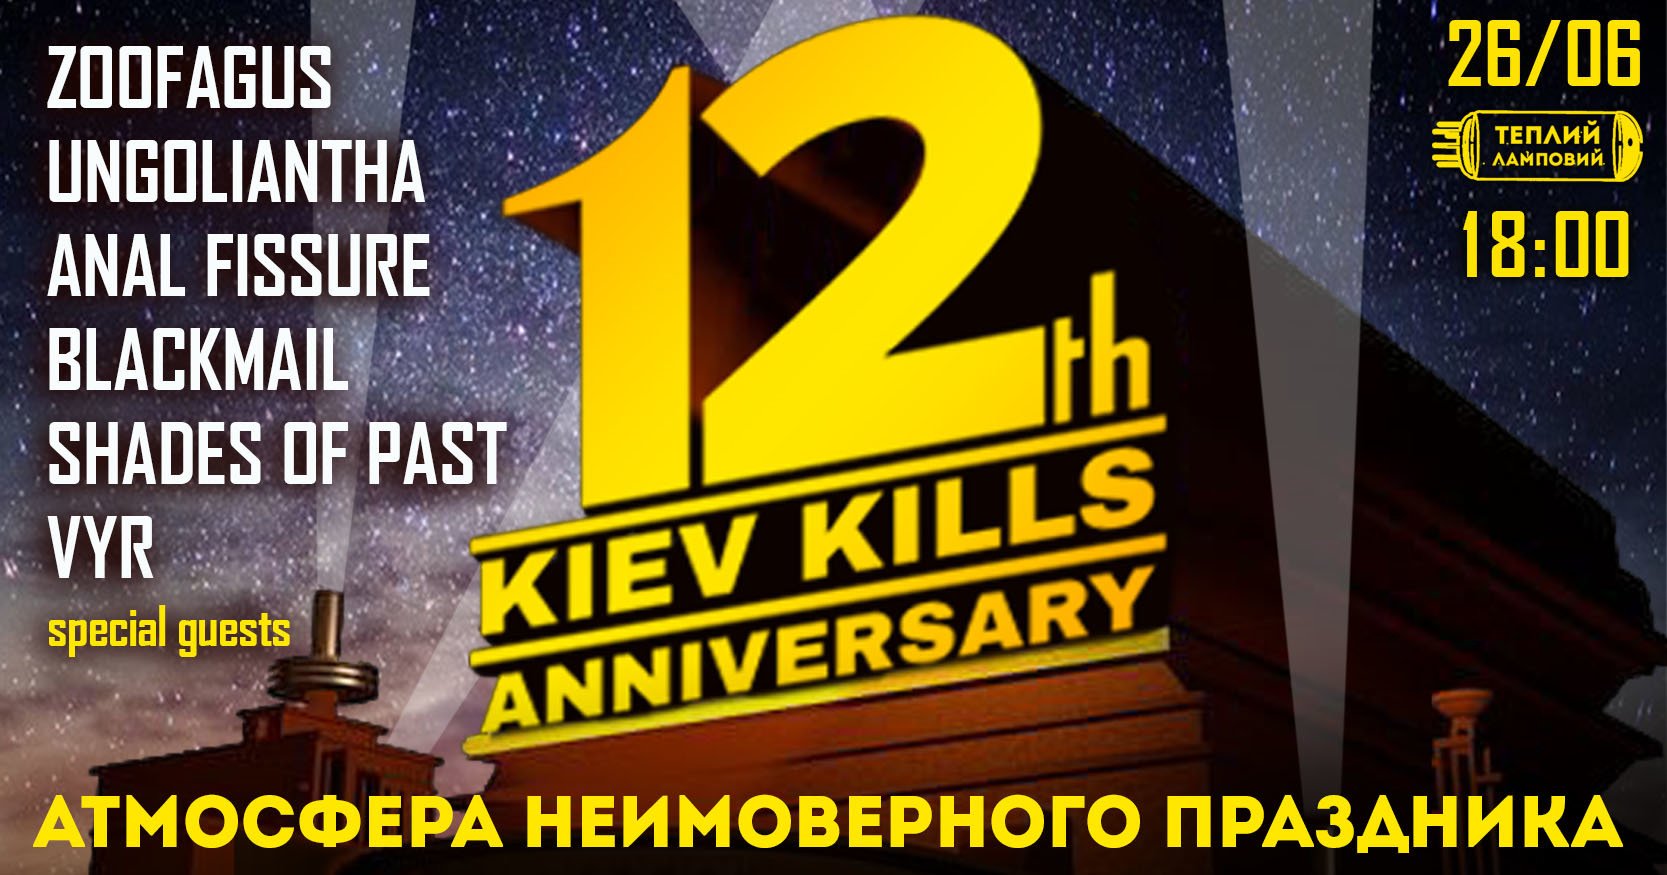 Kiev Kills: 12 Years Anniversary Party